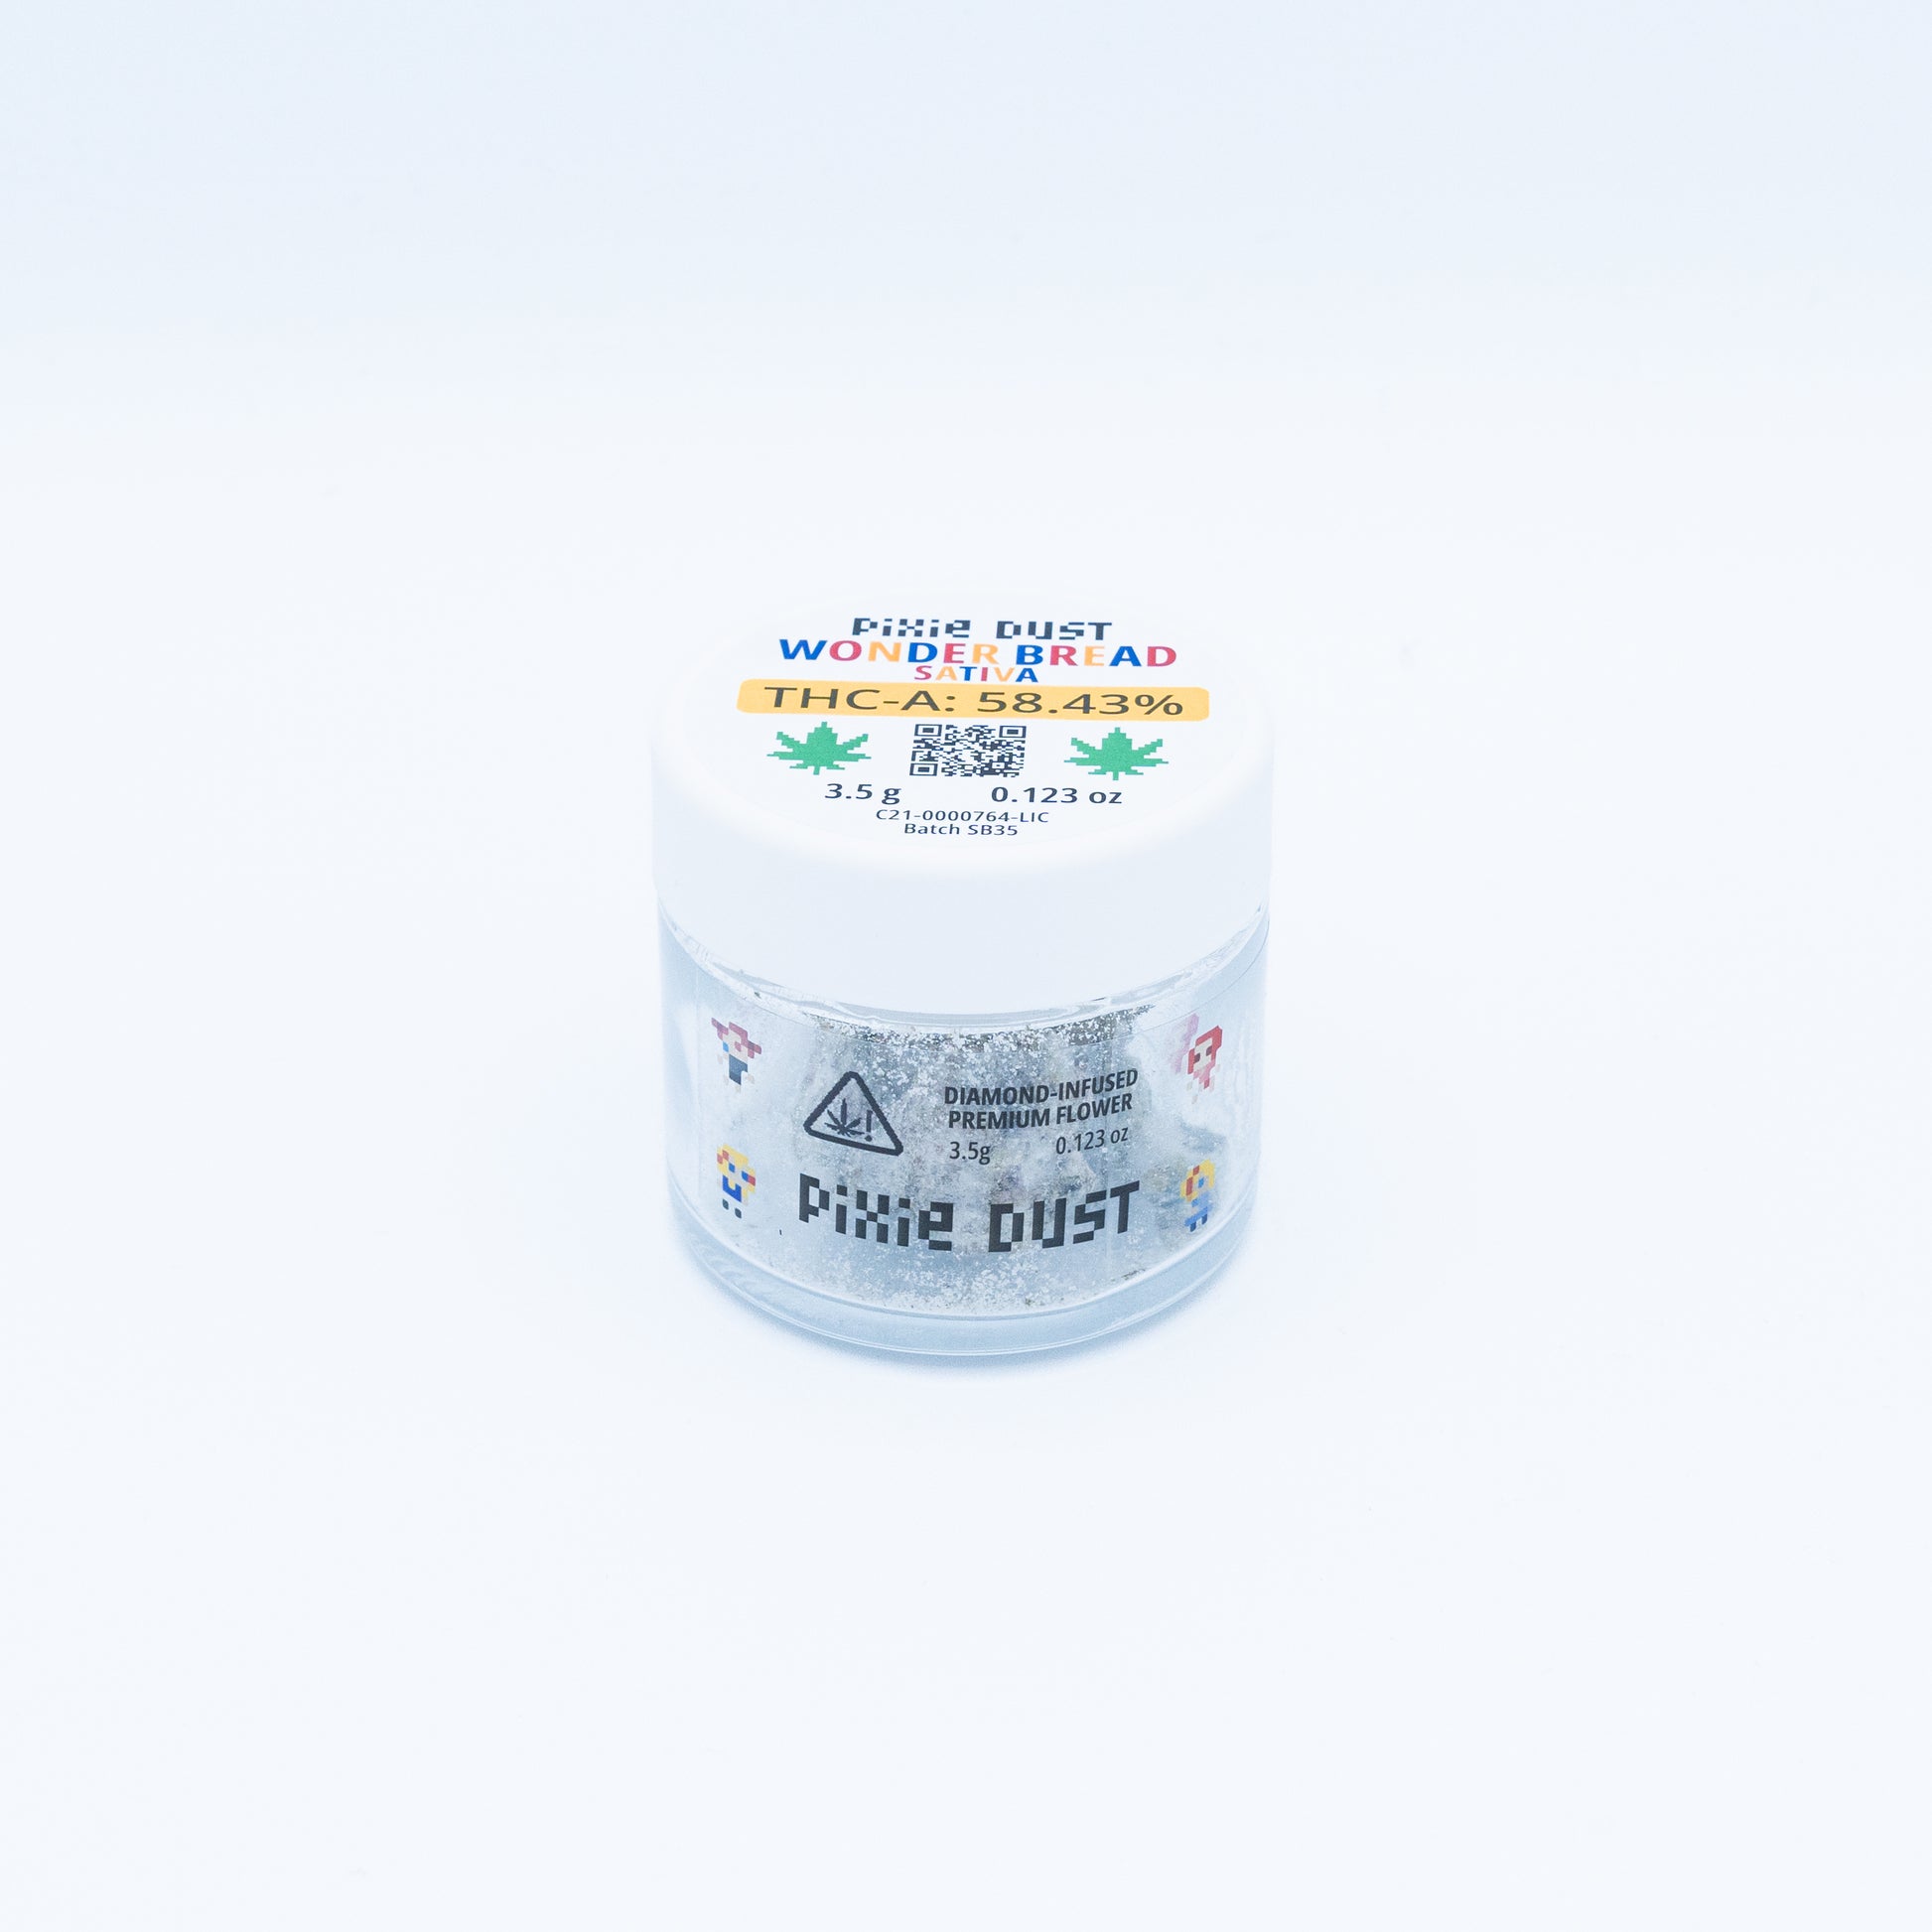 Pixie Dust- Diamond infused THCA - Flower - Wonder Bread - 3.5G - Burning Daily